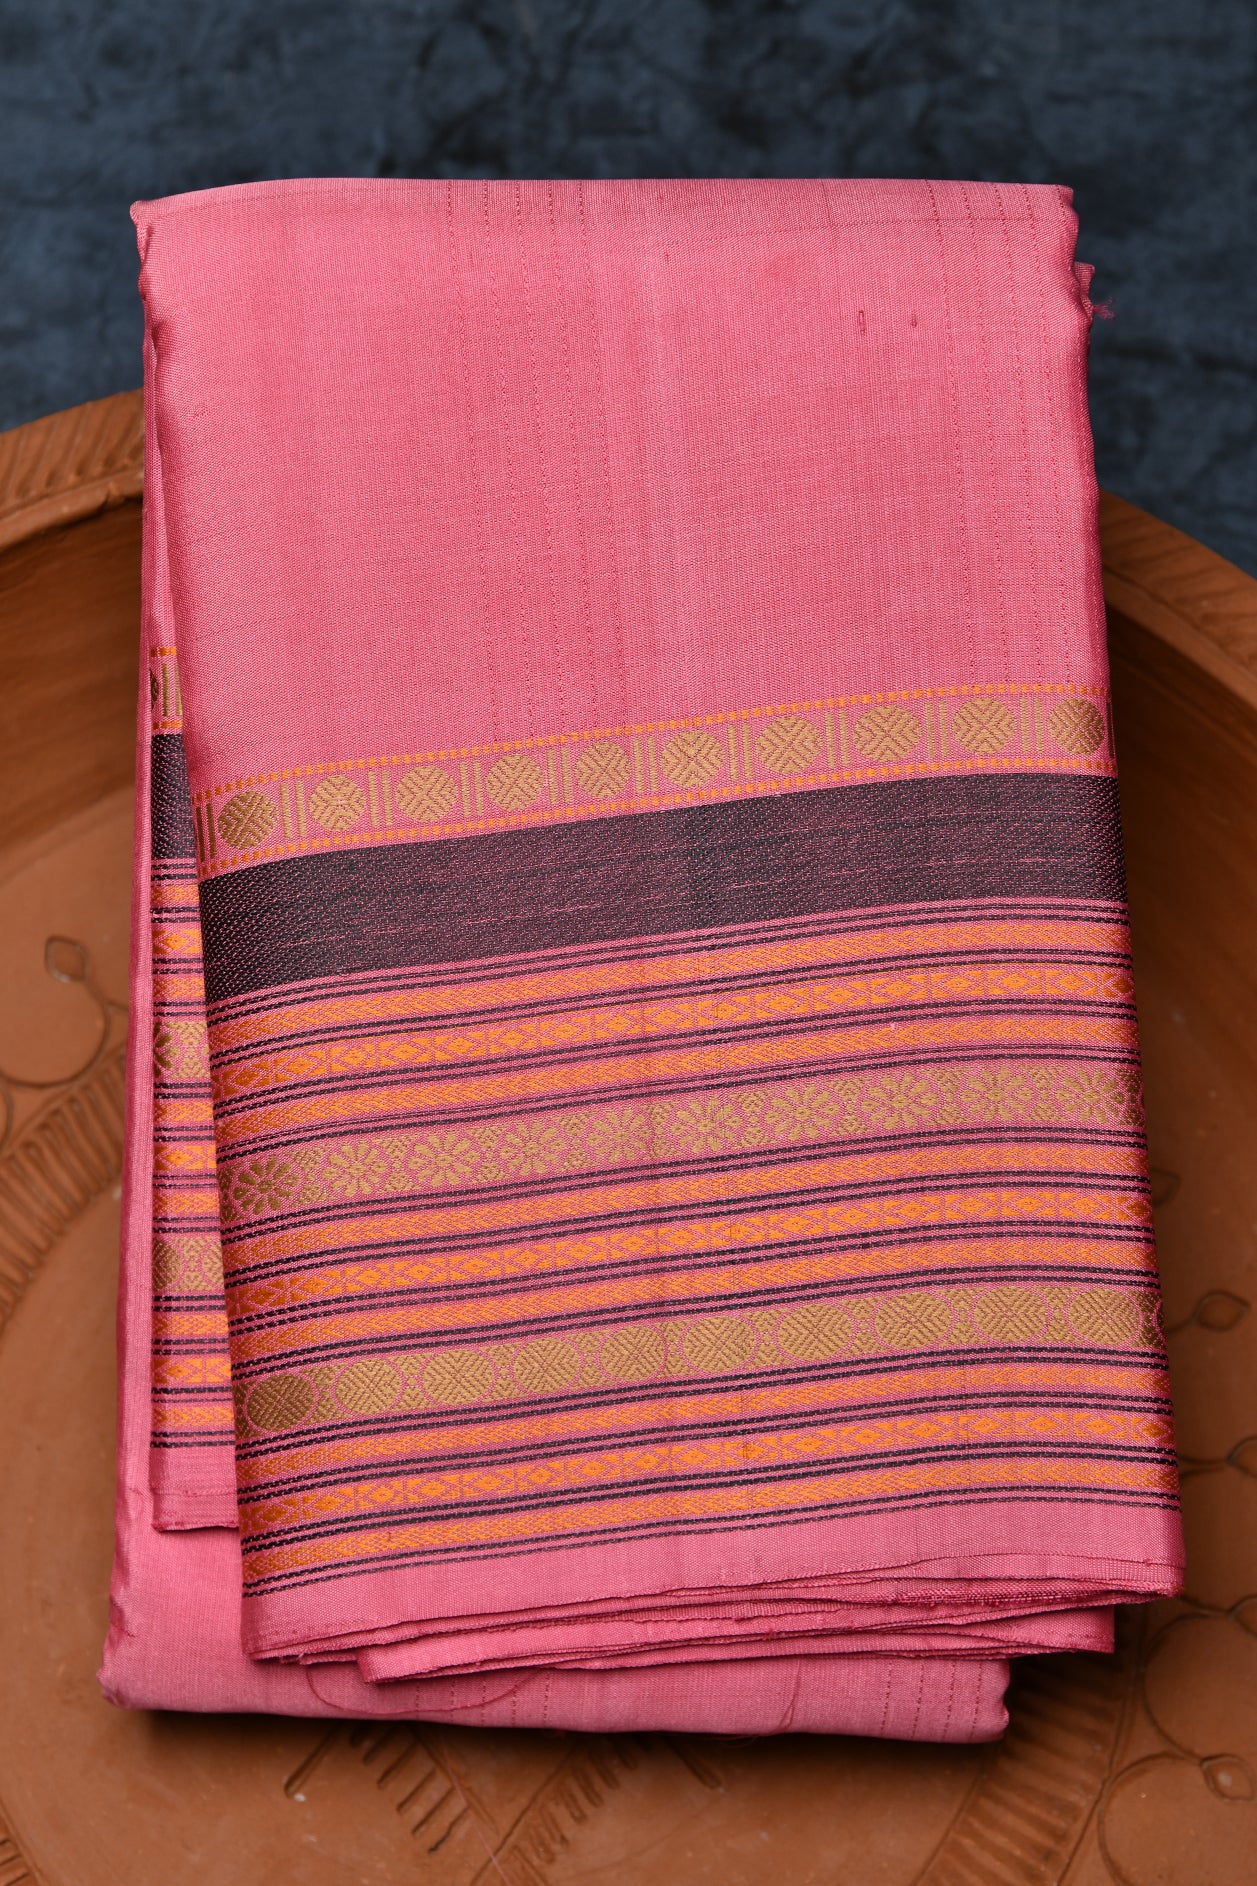 Thread Work Rudraksh Border In Plain Onion Pink Kanchipuram Silk Saree